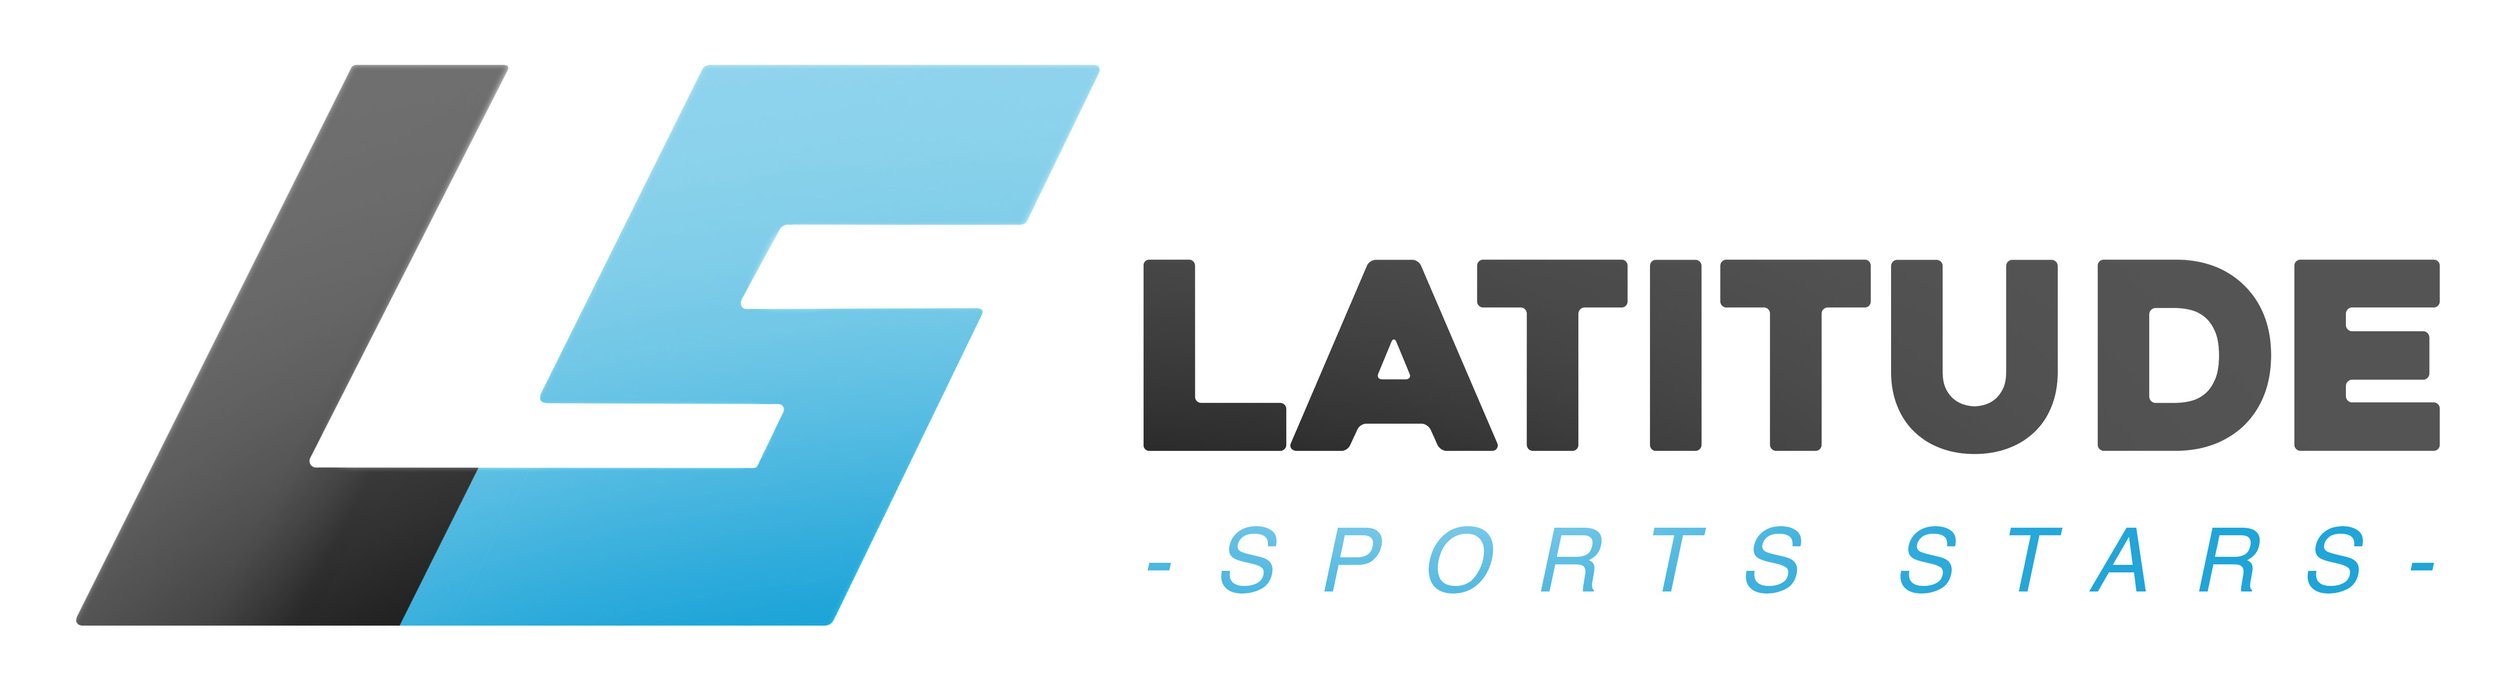 Latitude Sports Stars